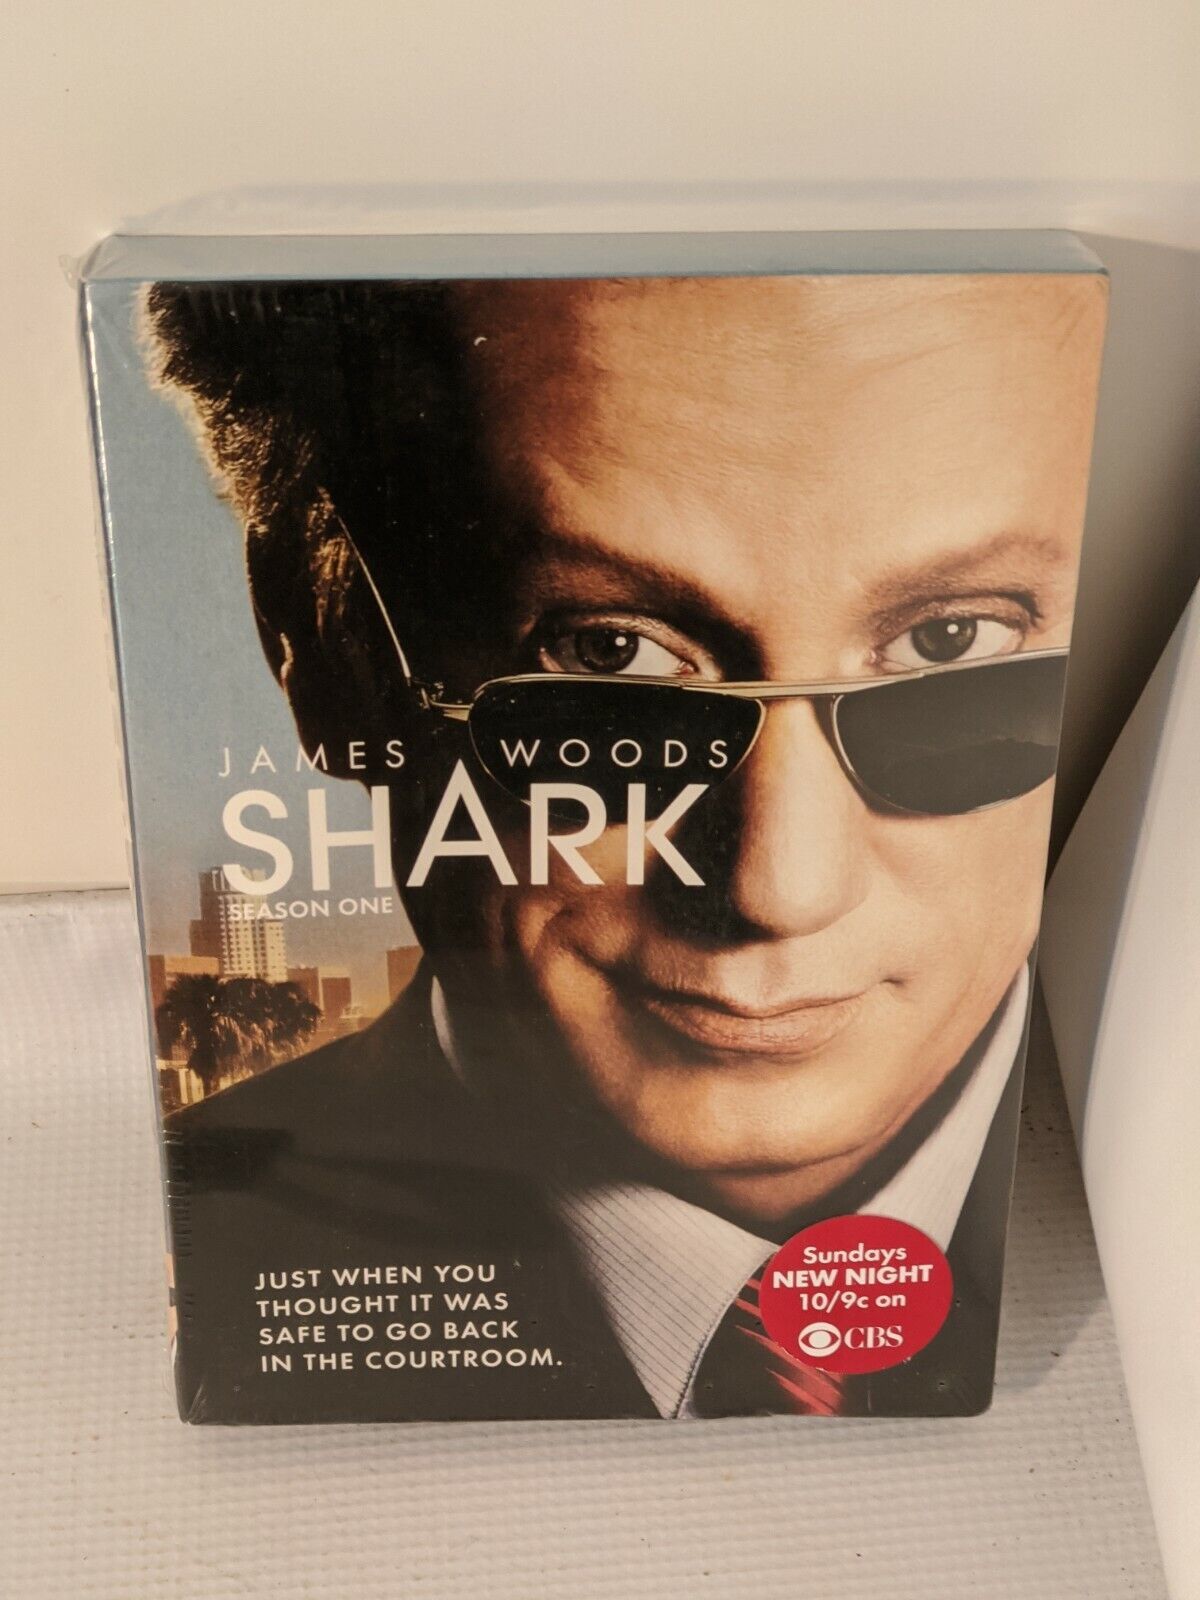 Primary image for 2007 Shark Season One, 6 Disc DVD Set James Wood CBS - New-
show original tit...